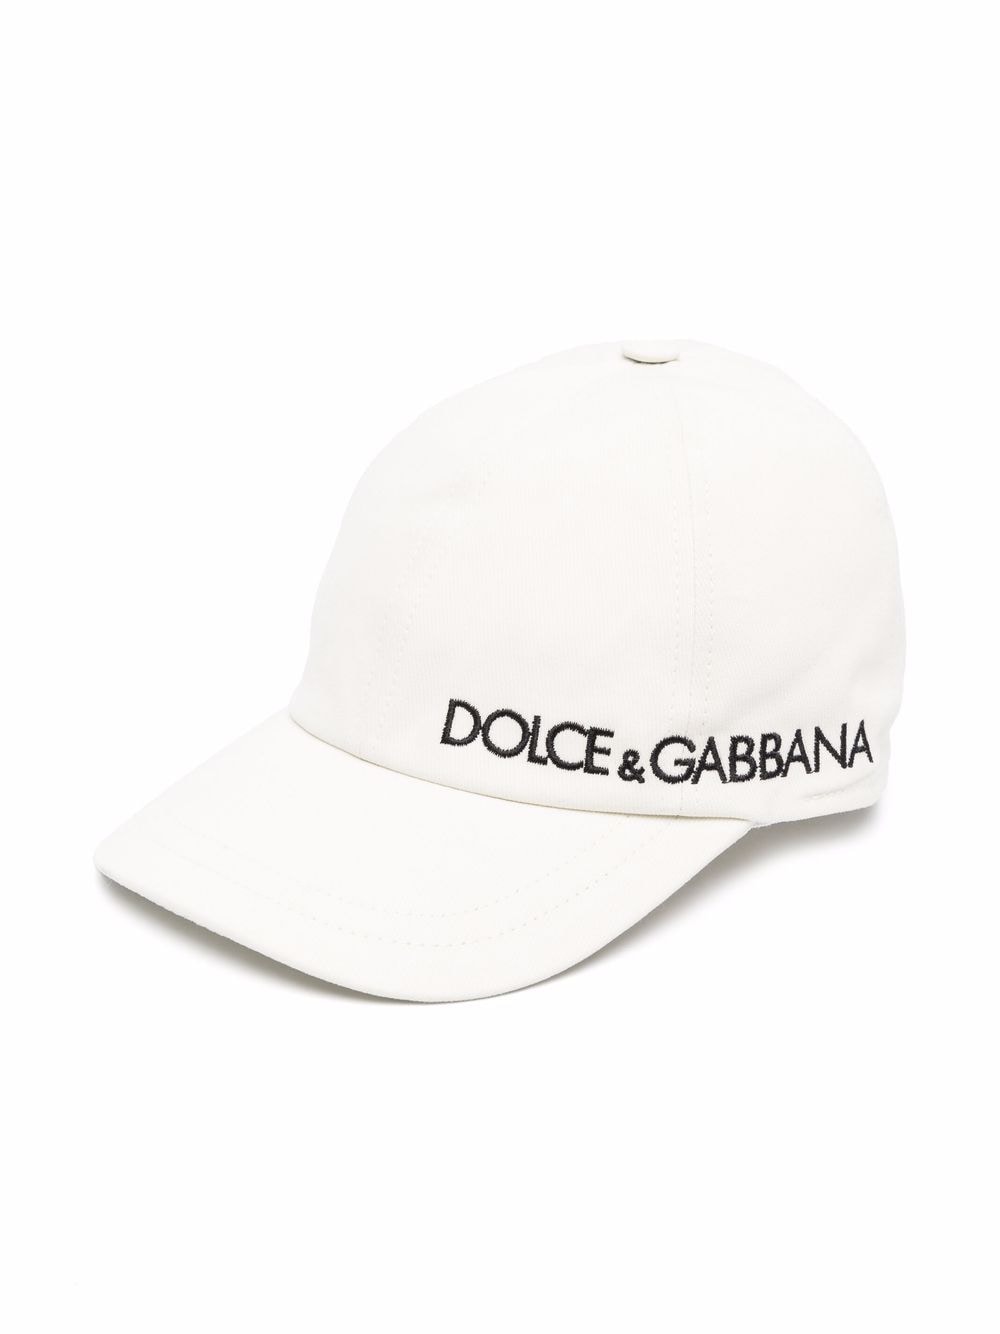 фото Dolce & gabbana kids кепка с вышитым логотипом